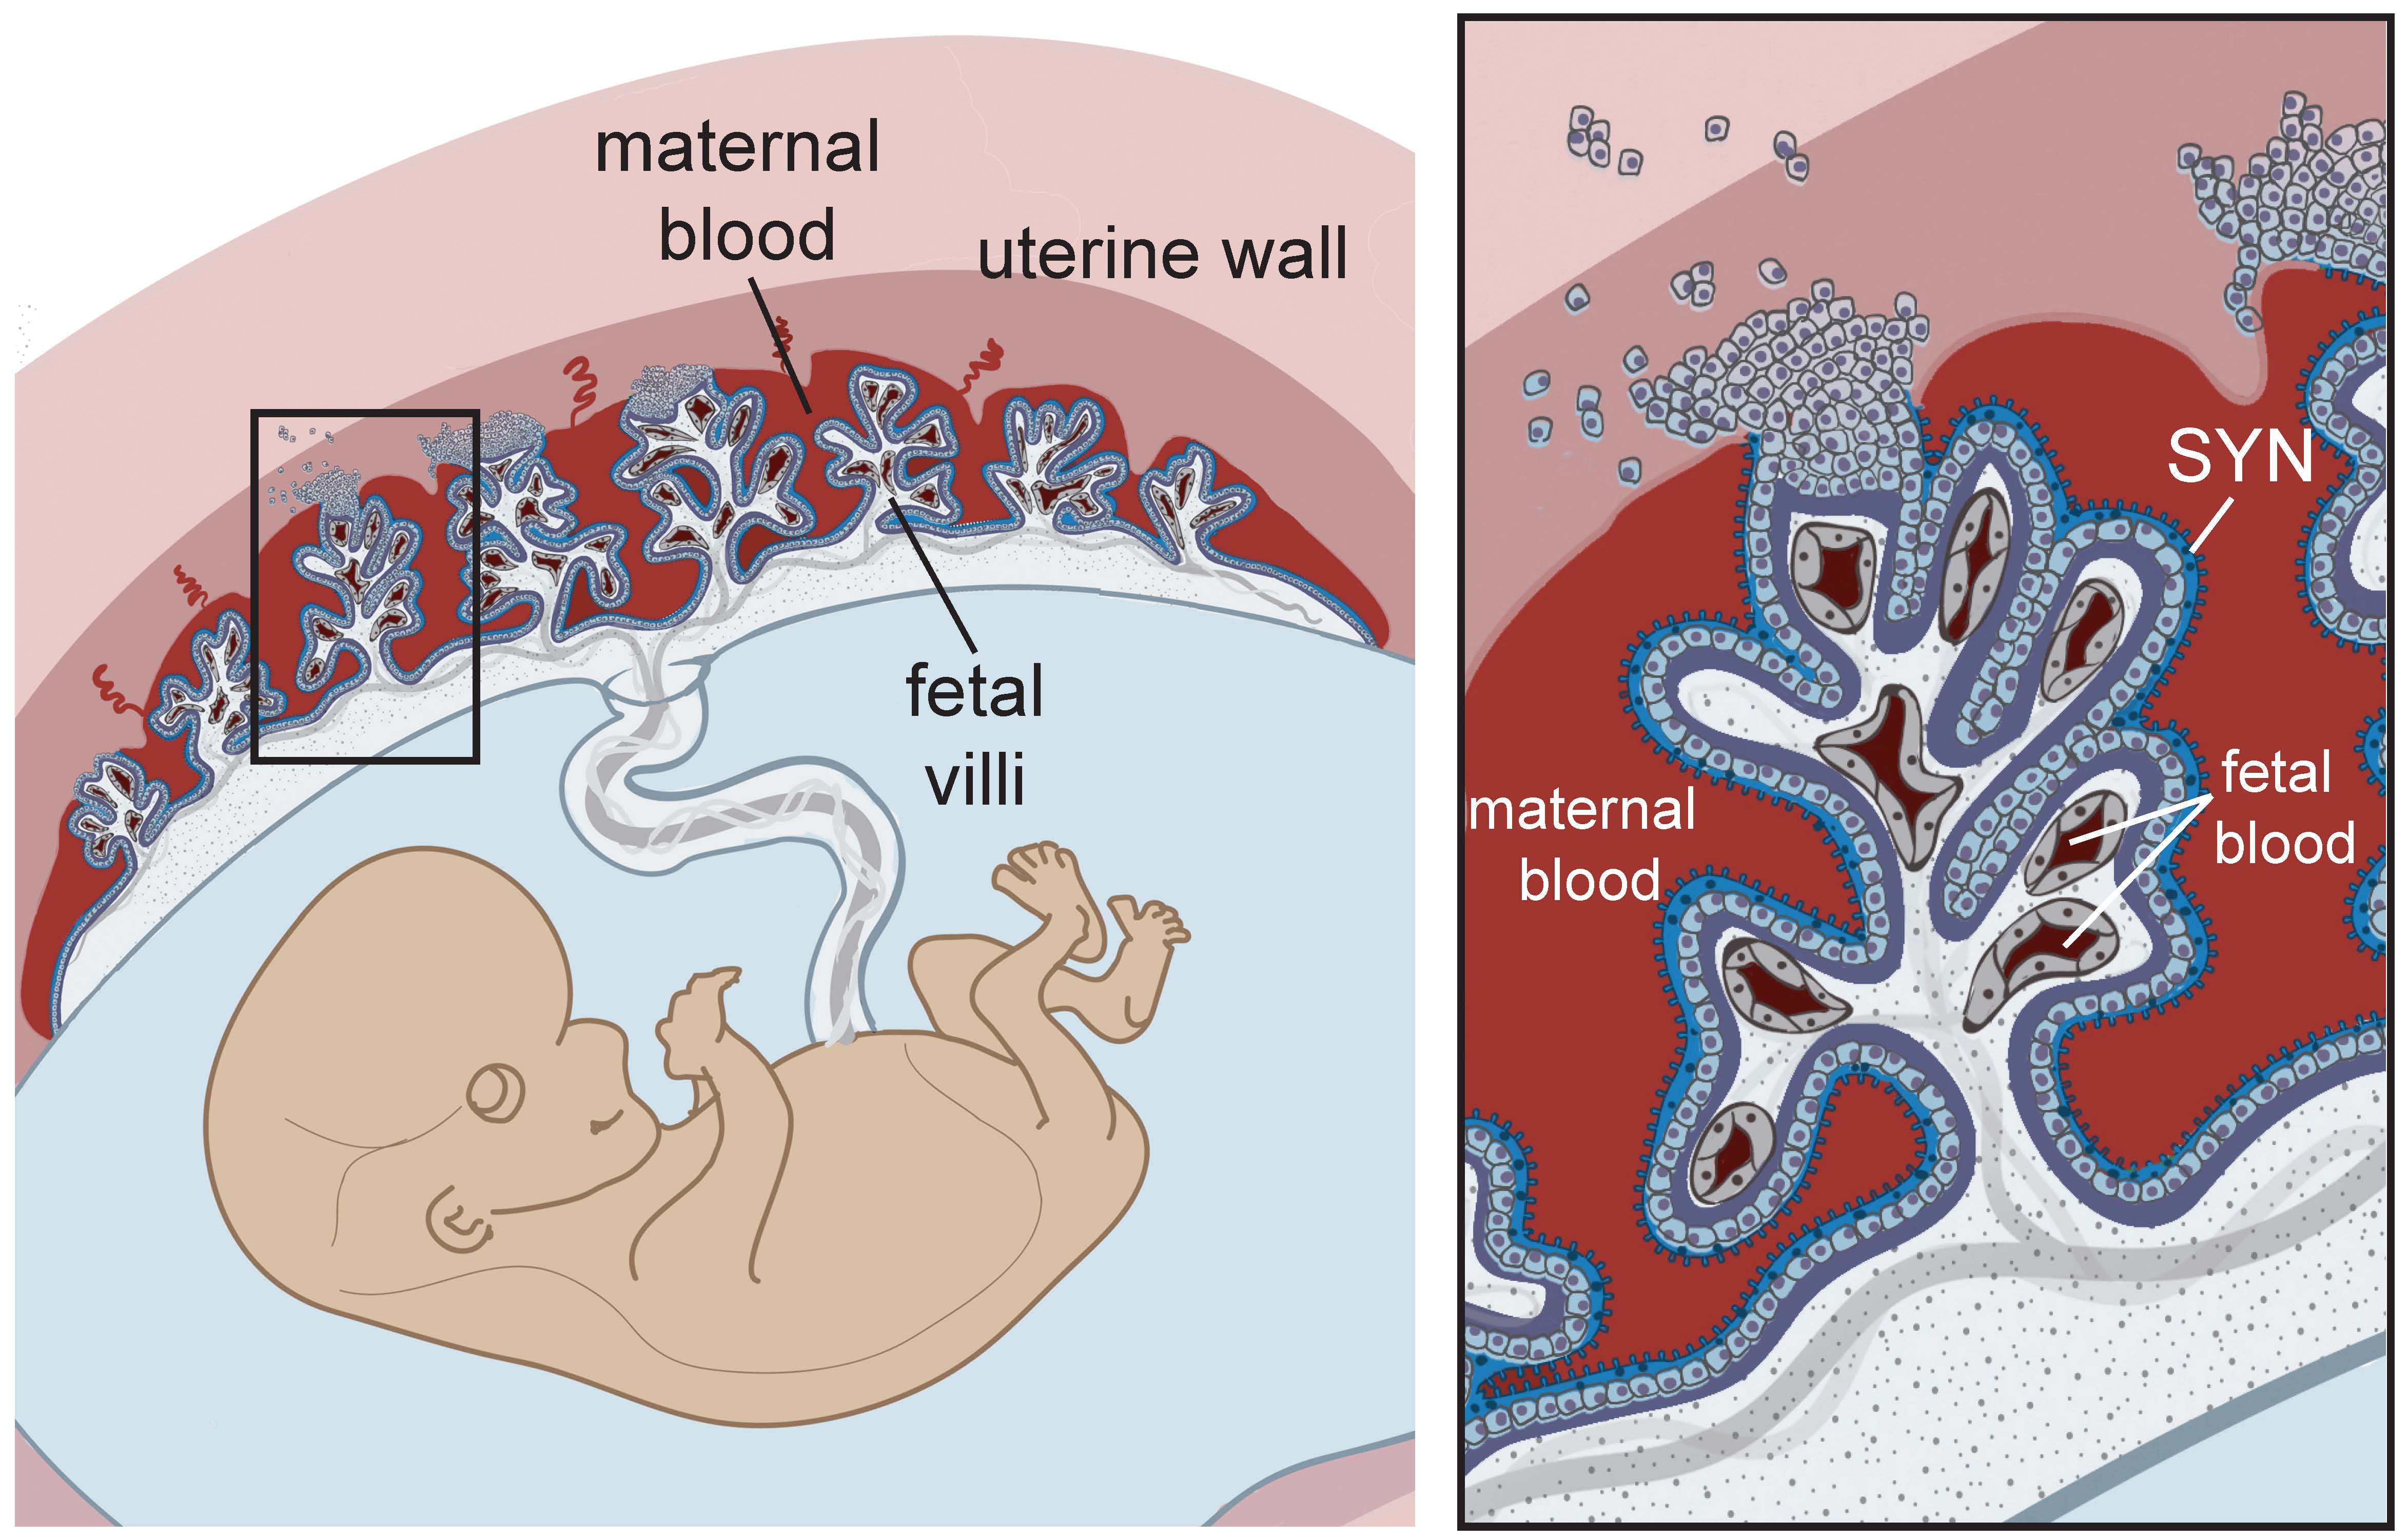 2 types of placental presentation